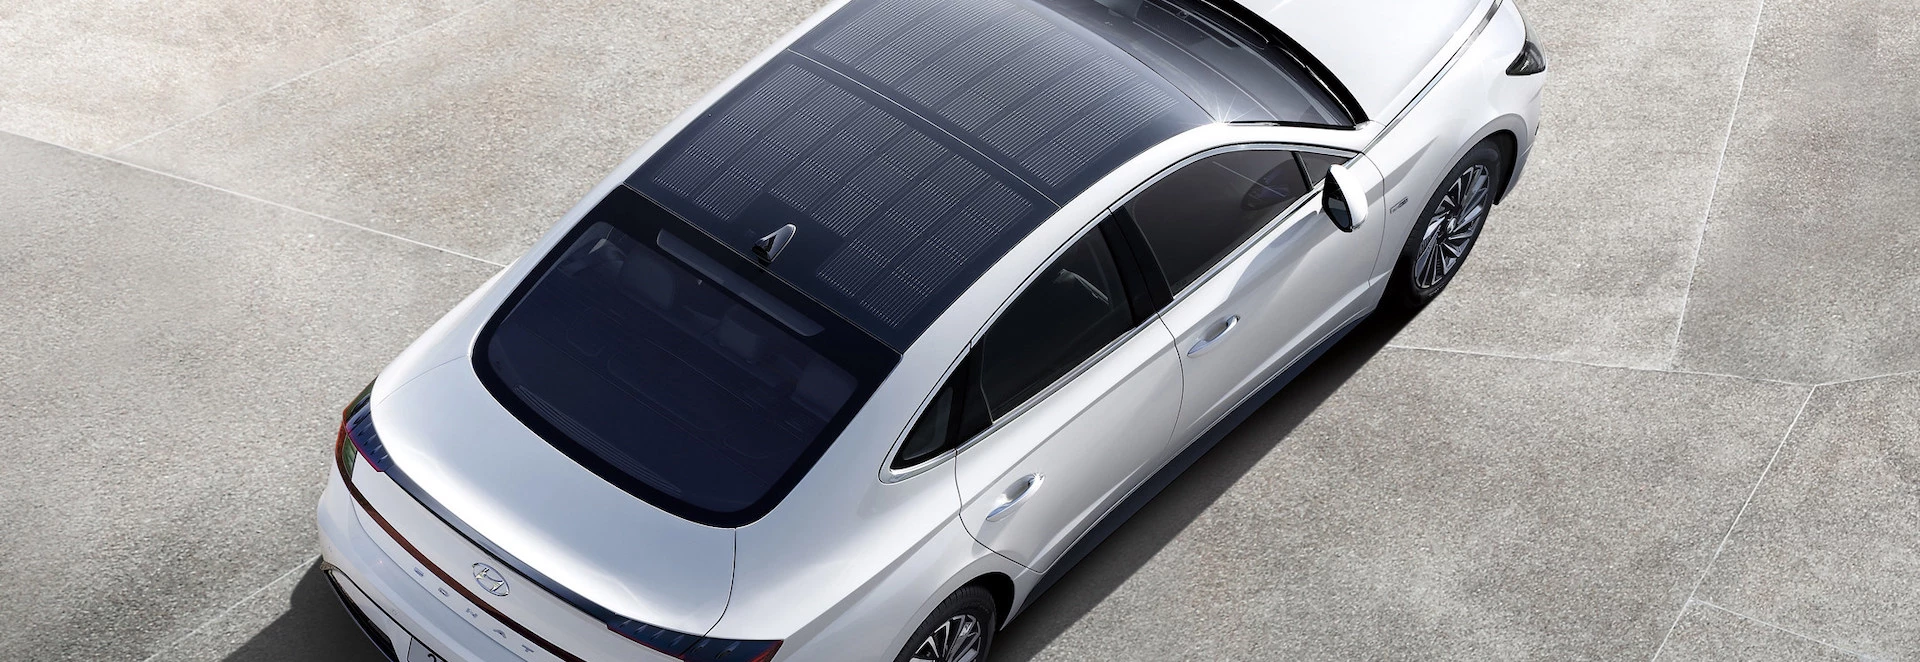 Hyundai’s new solar car roof aims to increase range as the car drives 